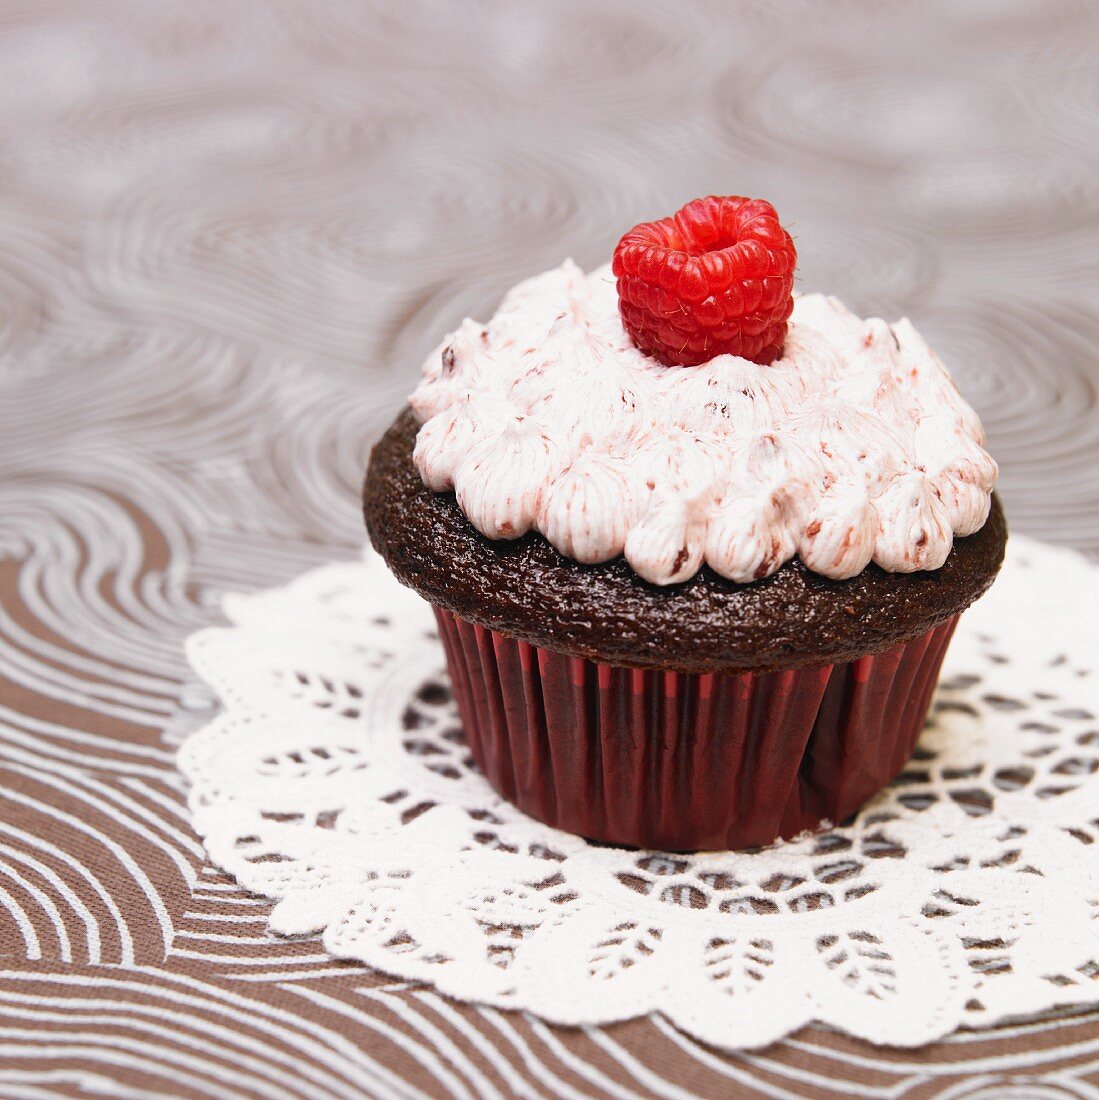 Chocolate Cupcake with Raspberry Frosting with a Fresh Raspberry Garnish